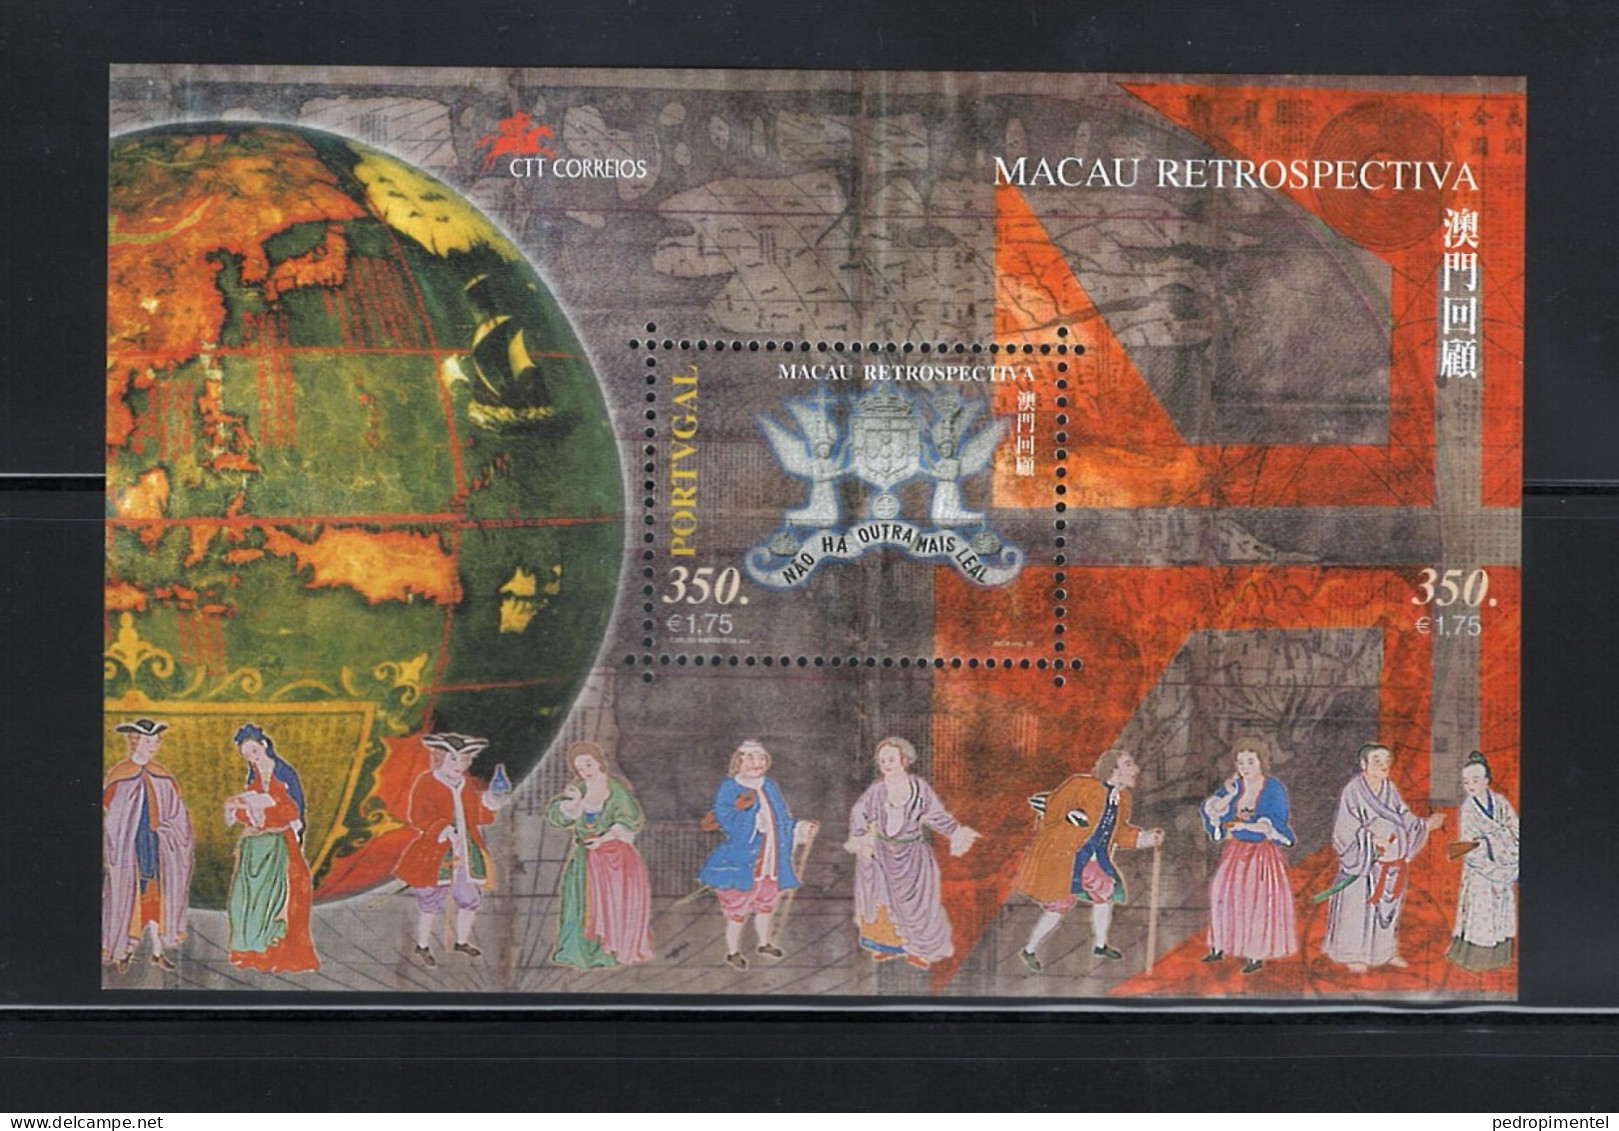 Portugal Stamps 1999 "Macau Retrospective" Condition MNH Minisheet #2639 - Ungebraucht